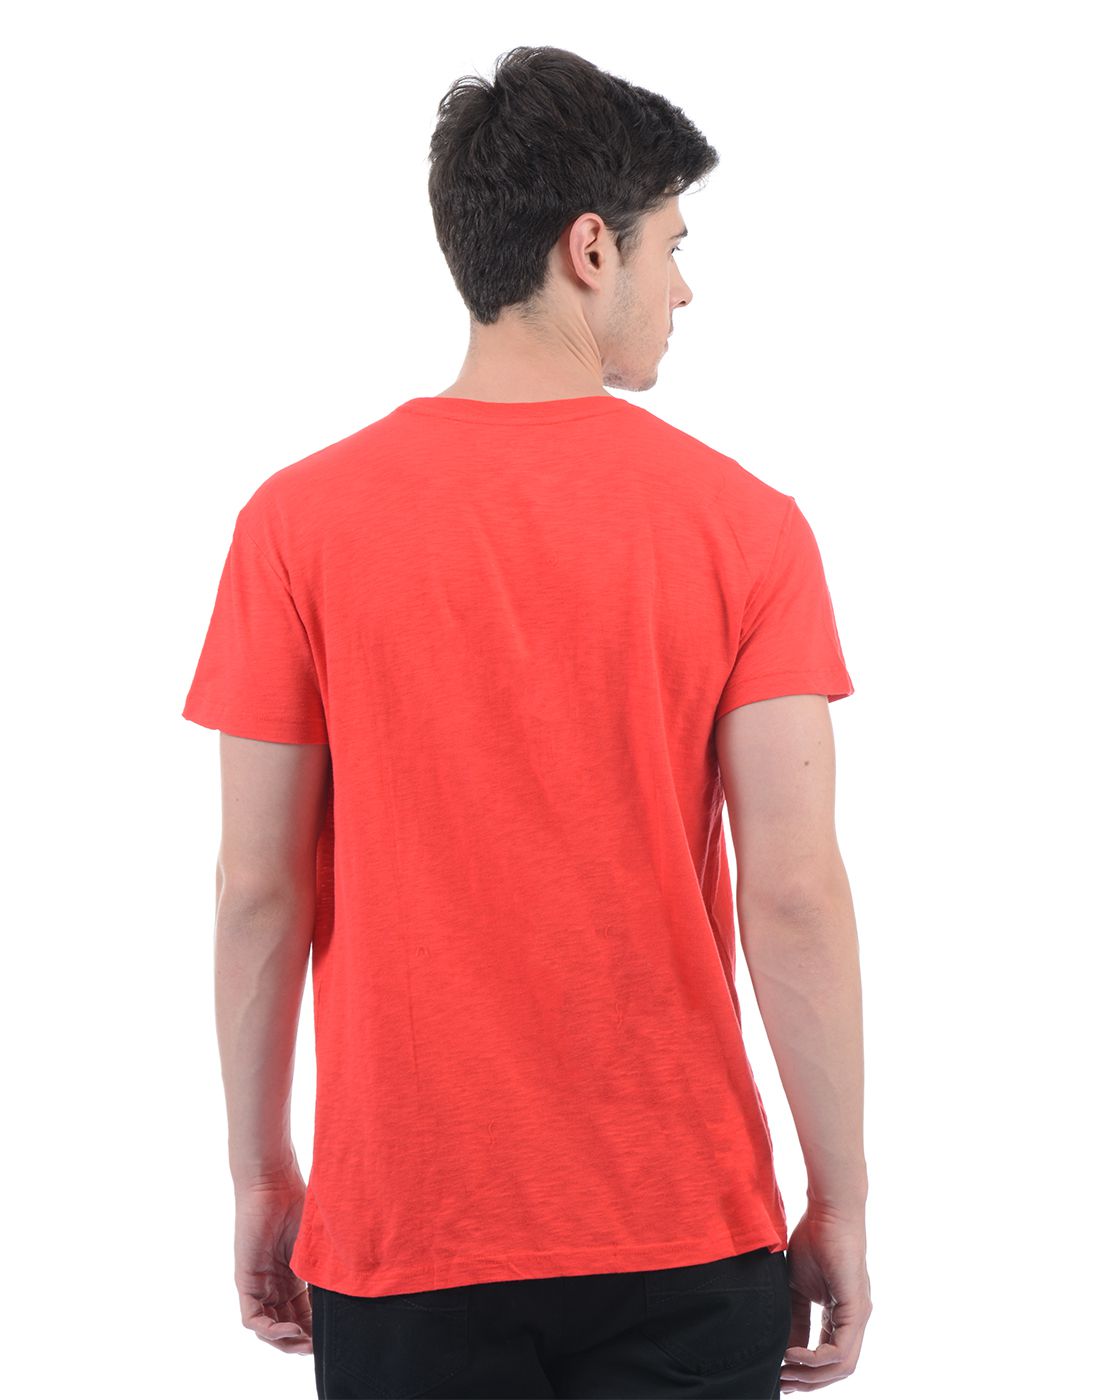 Aeropostale Red Round T-Shirt - Buy Aeropostale Red Round T-Shirt ...